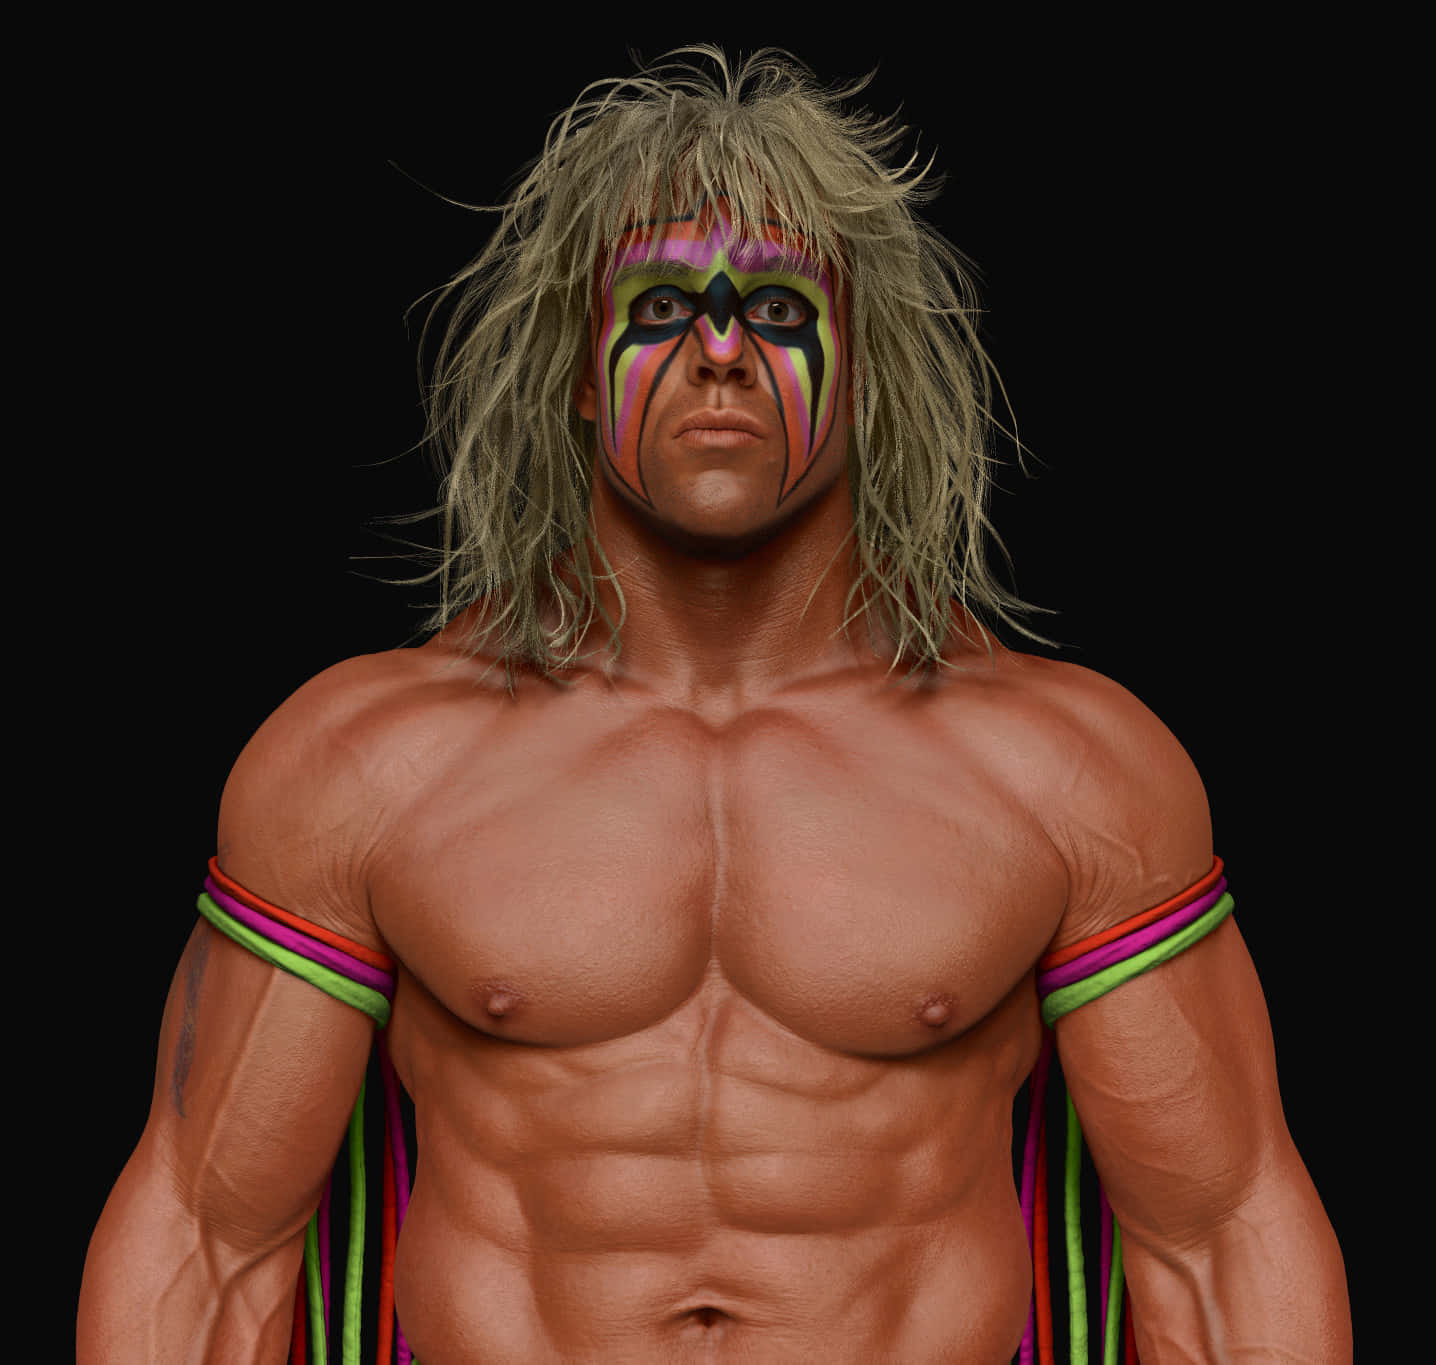 Wwe Wrestler Ultimate Warrior Digital Art Wallpaper